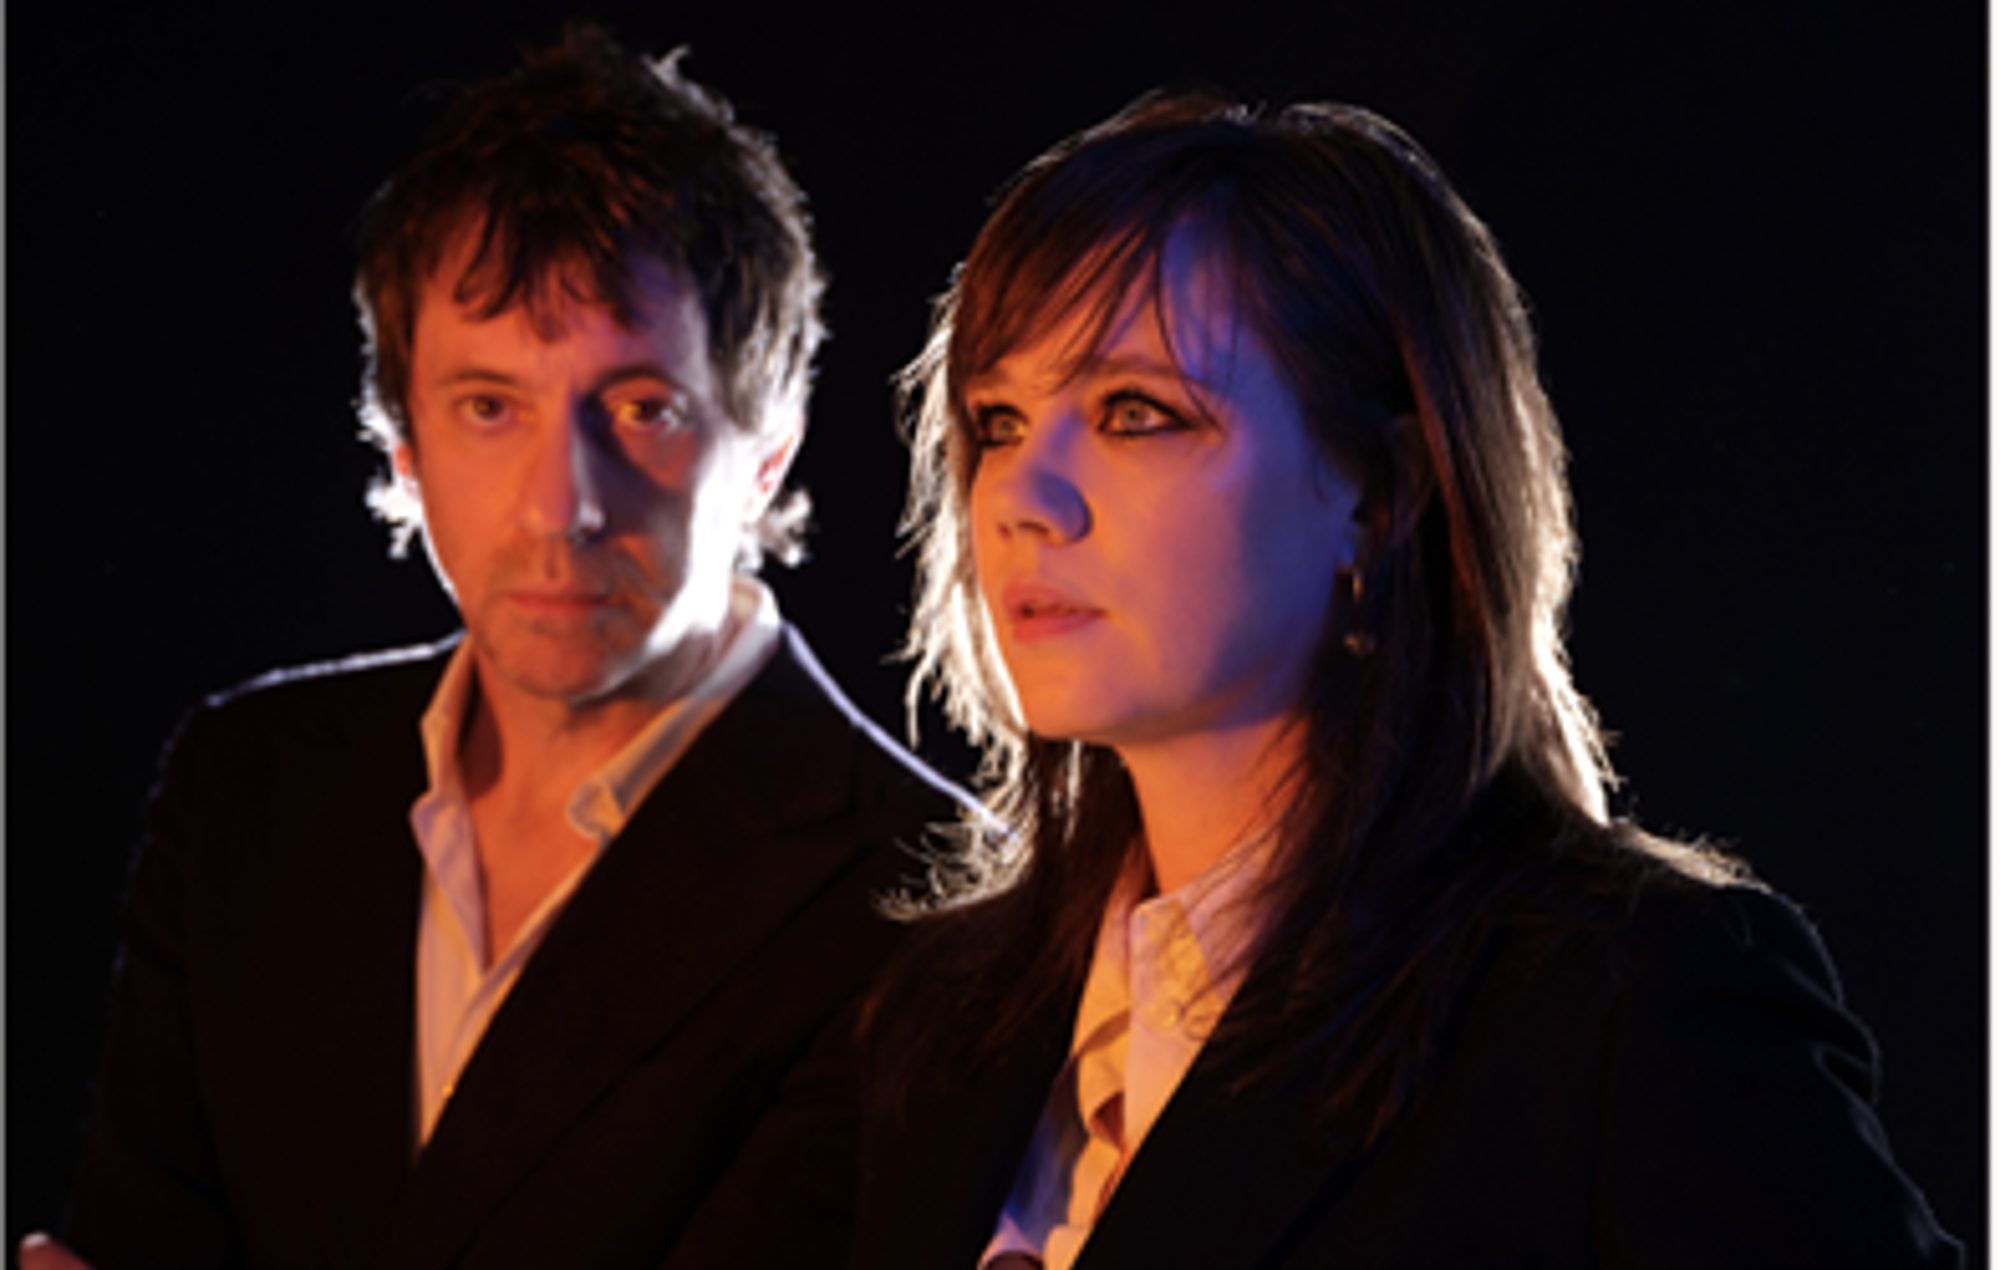 Graham Coxon and Rose Elinor Dougall’s THE WAEVE announce album ‘City Lights’